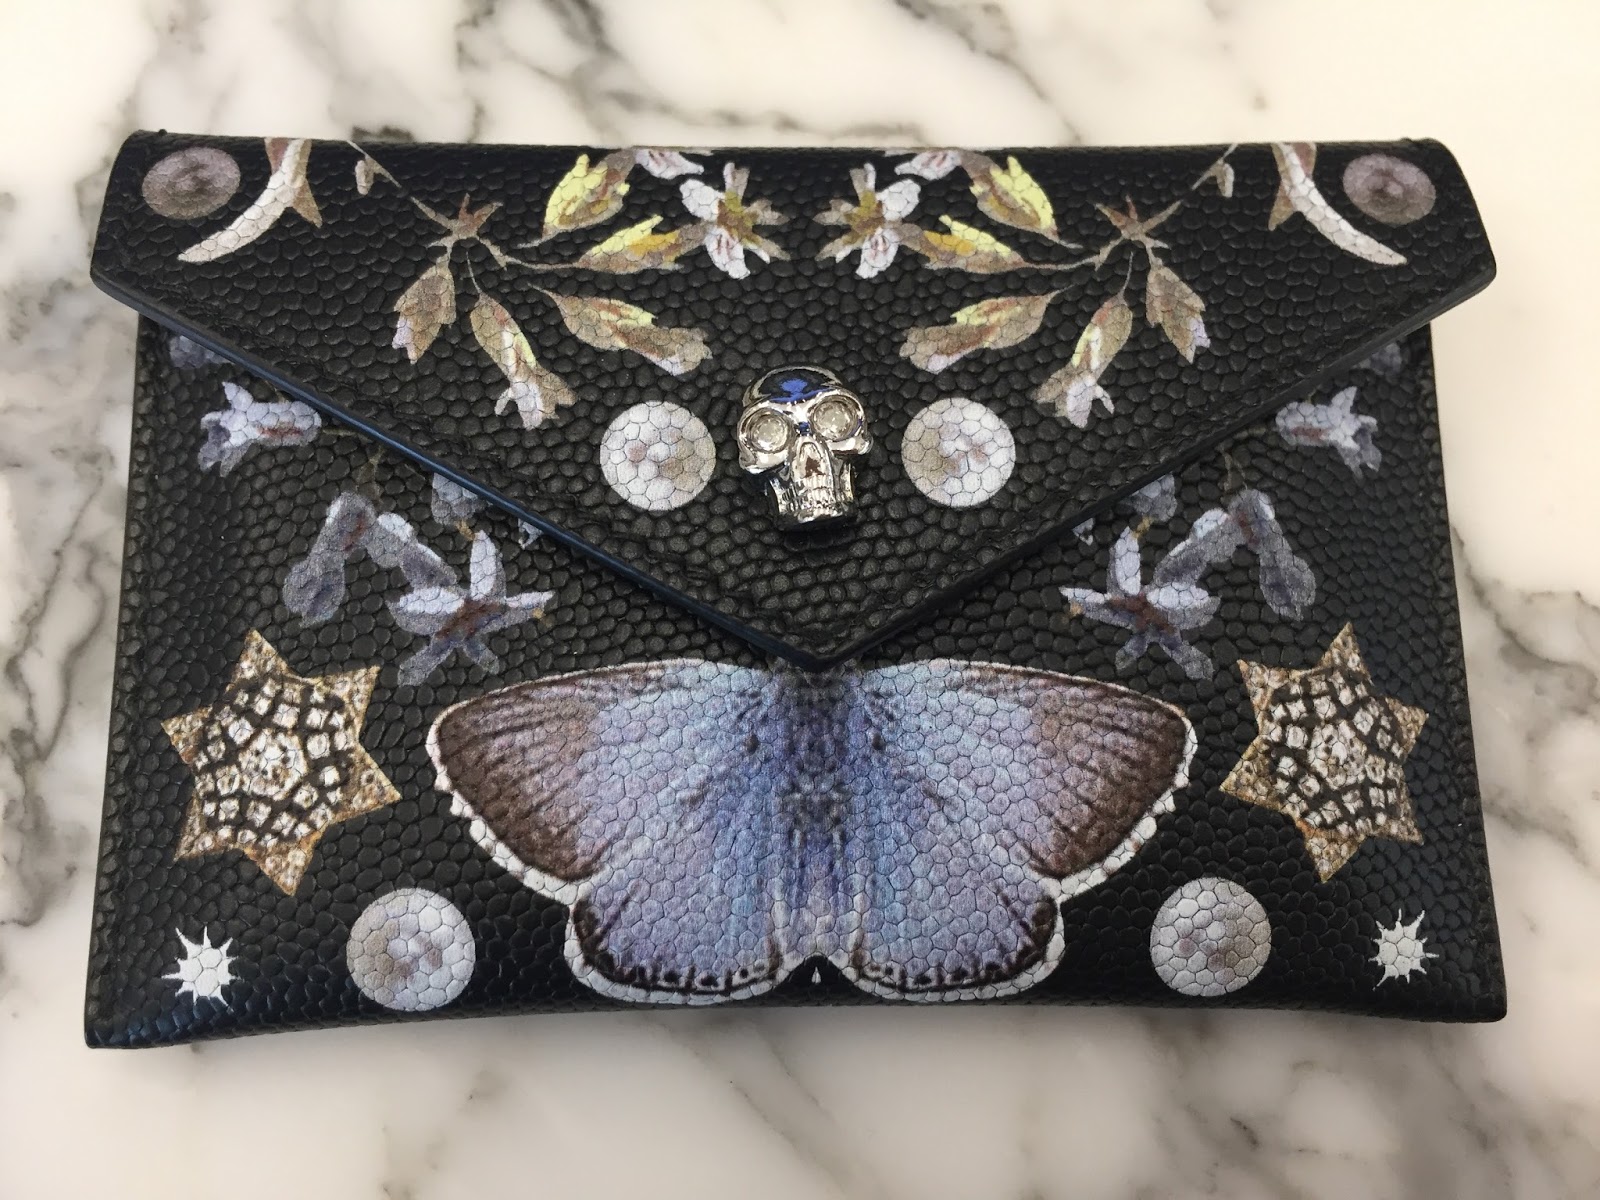 New Card Case! Review Louis Vuitton Sarah Multicartes Epi Leather &  Alexander McQueen Nocturnal Card Case